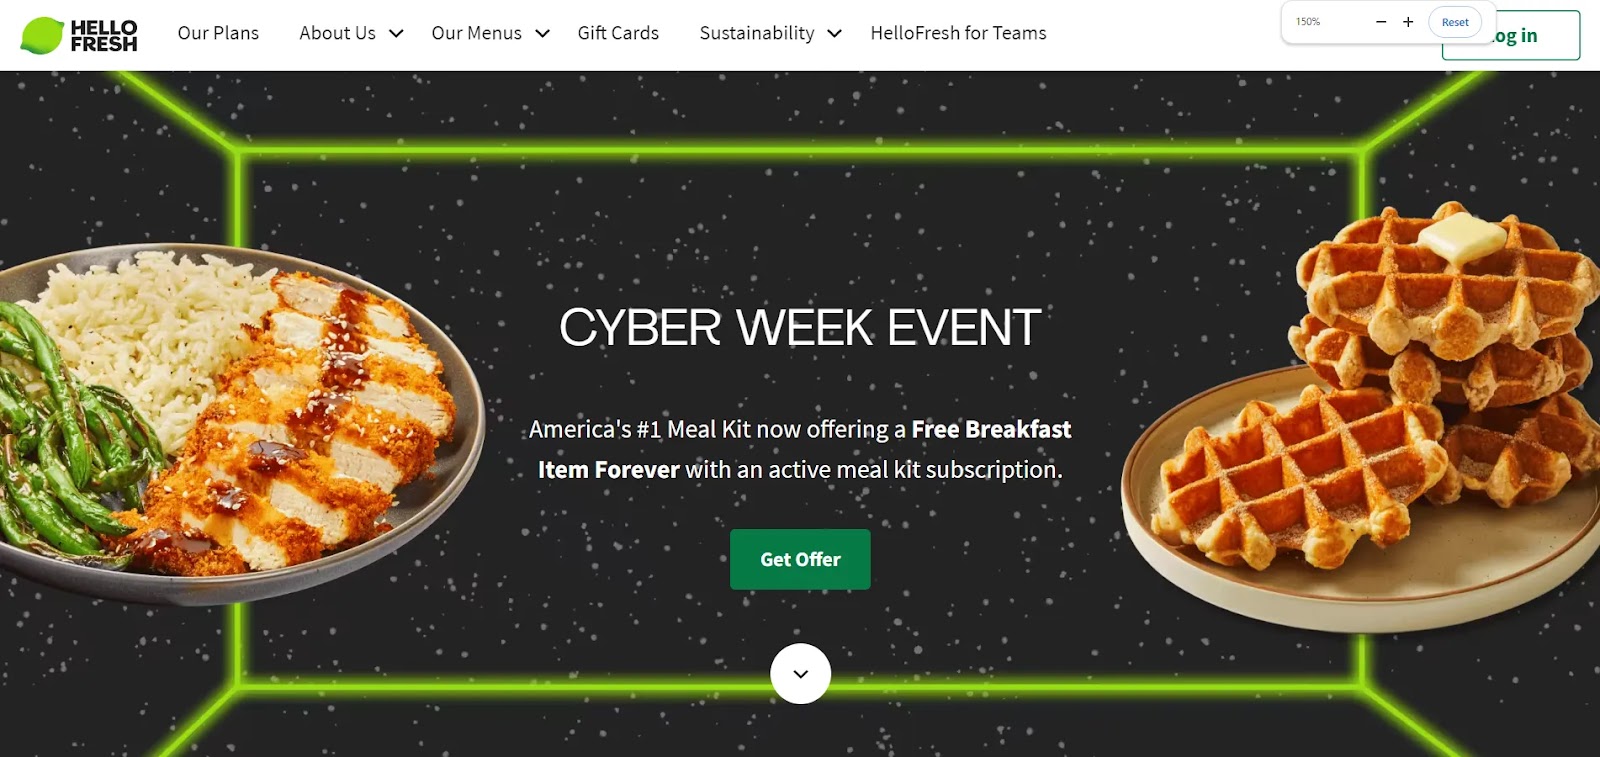 HelloFresh's Cyber week event landing page